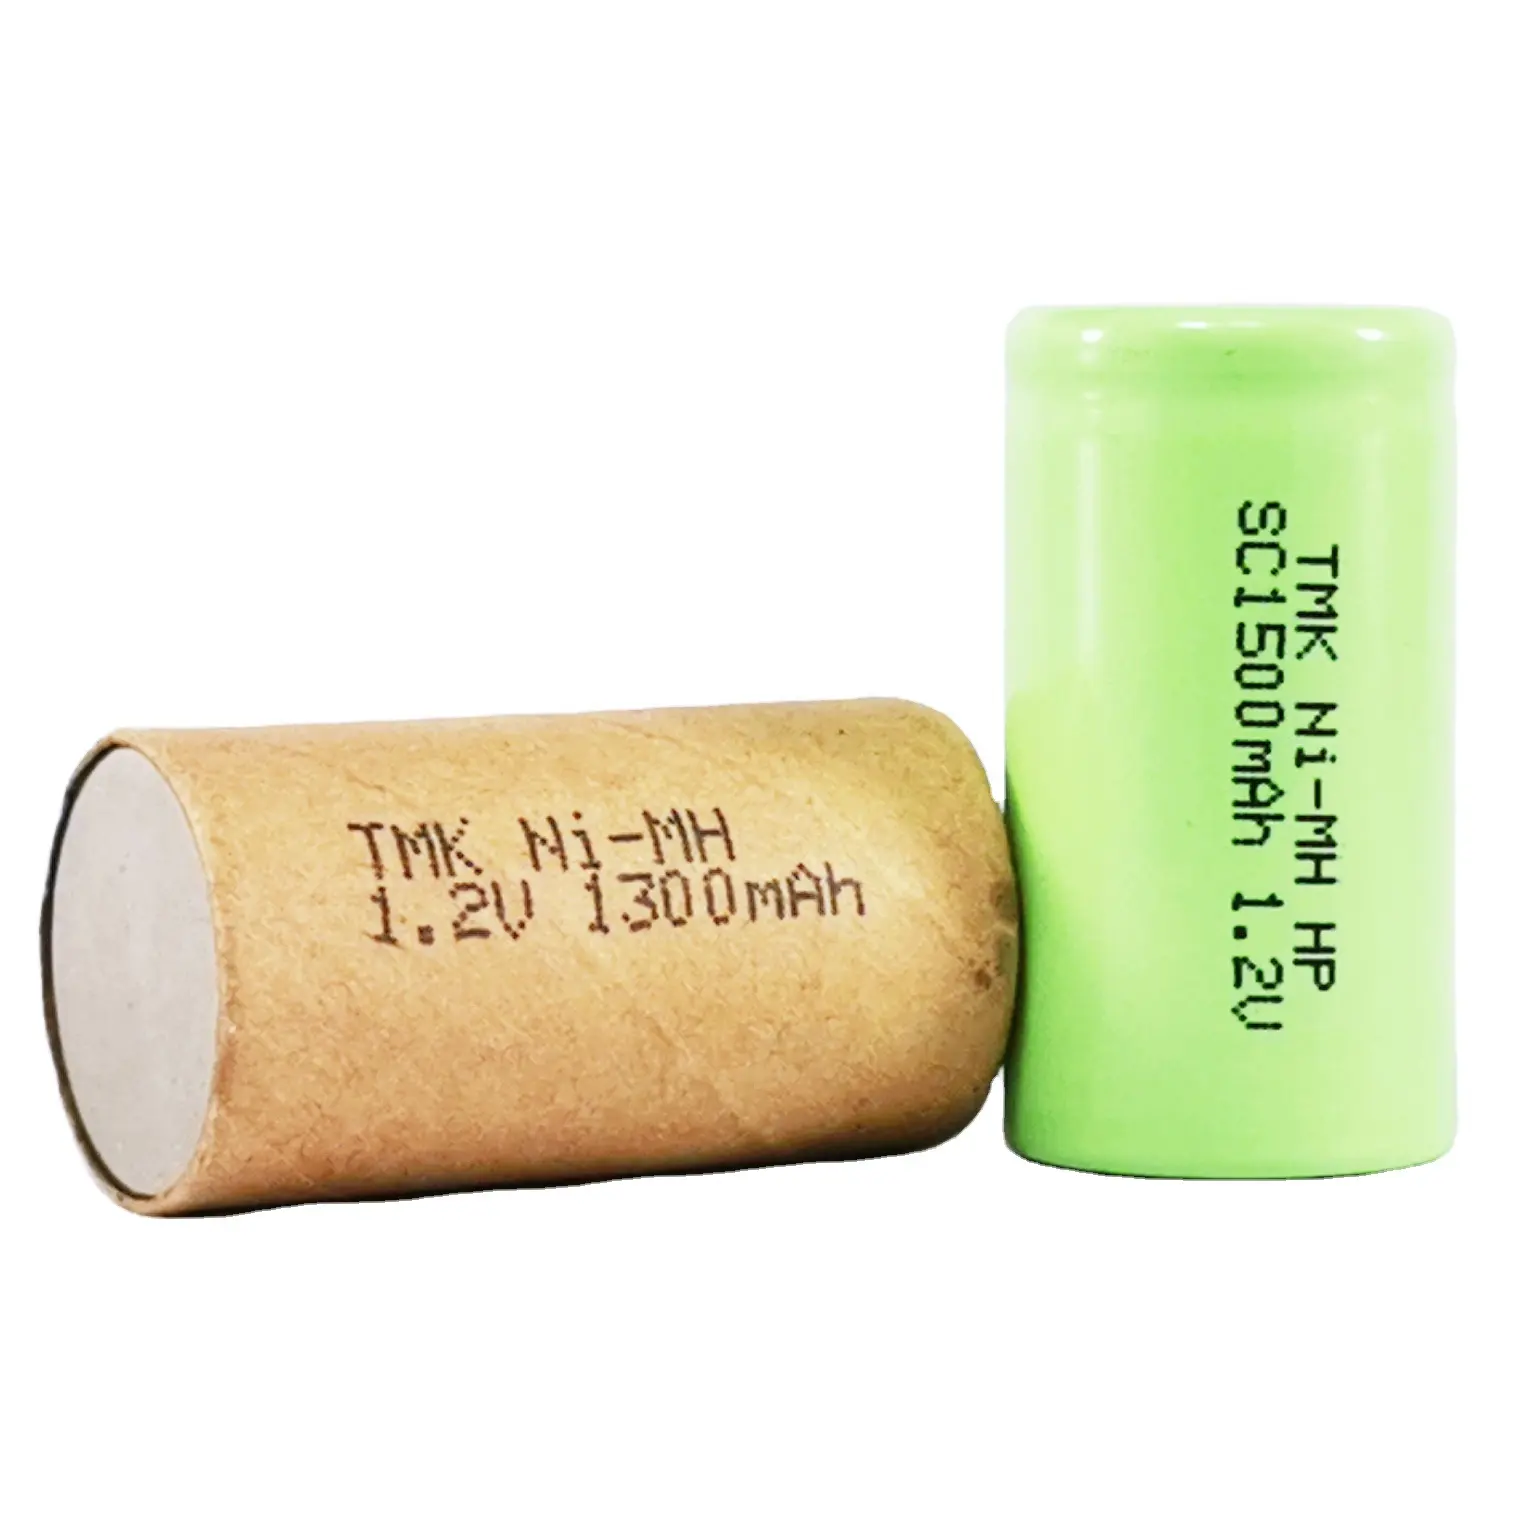 Nimh bateria sc 1300mah 5c, carga de alta taxa, 5c, descarga atual ni-mh, bateria recarregável sc 1300mah